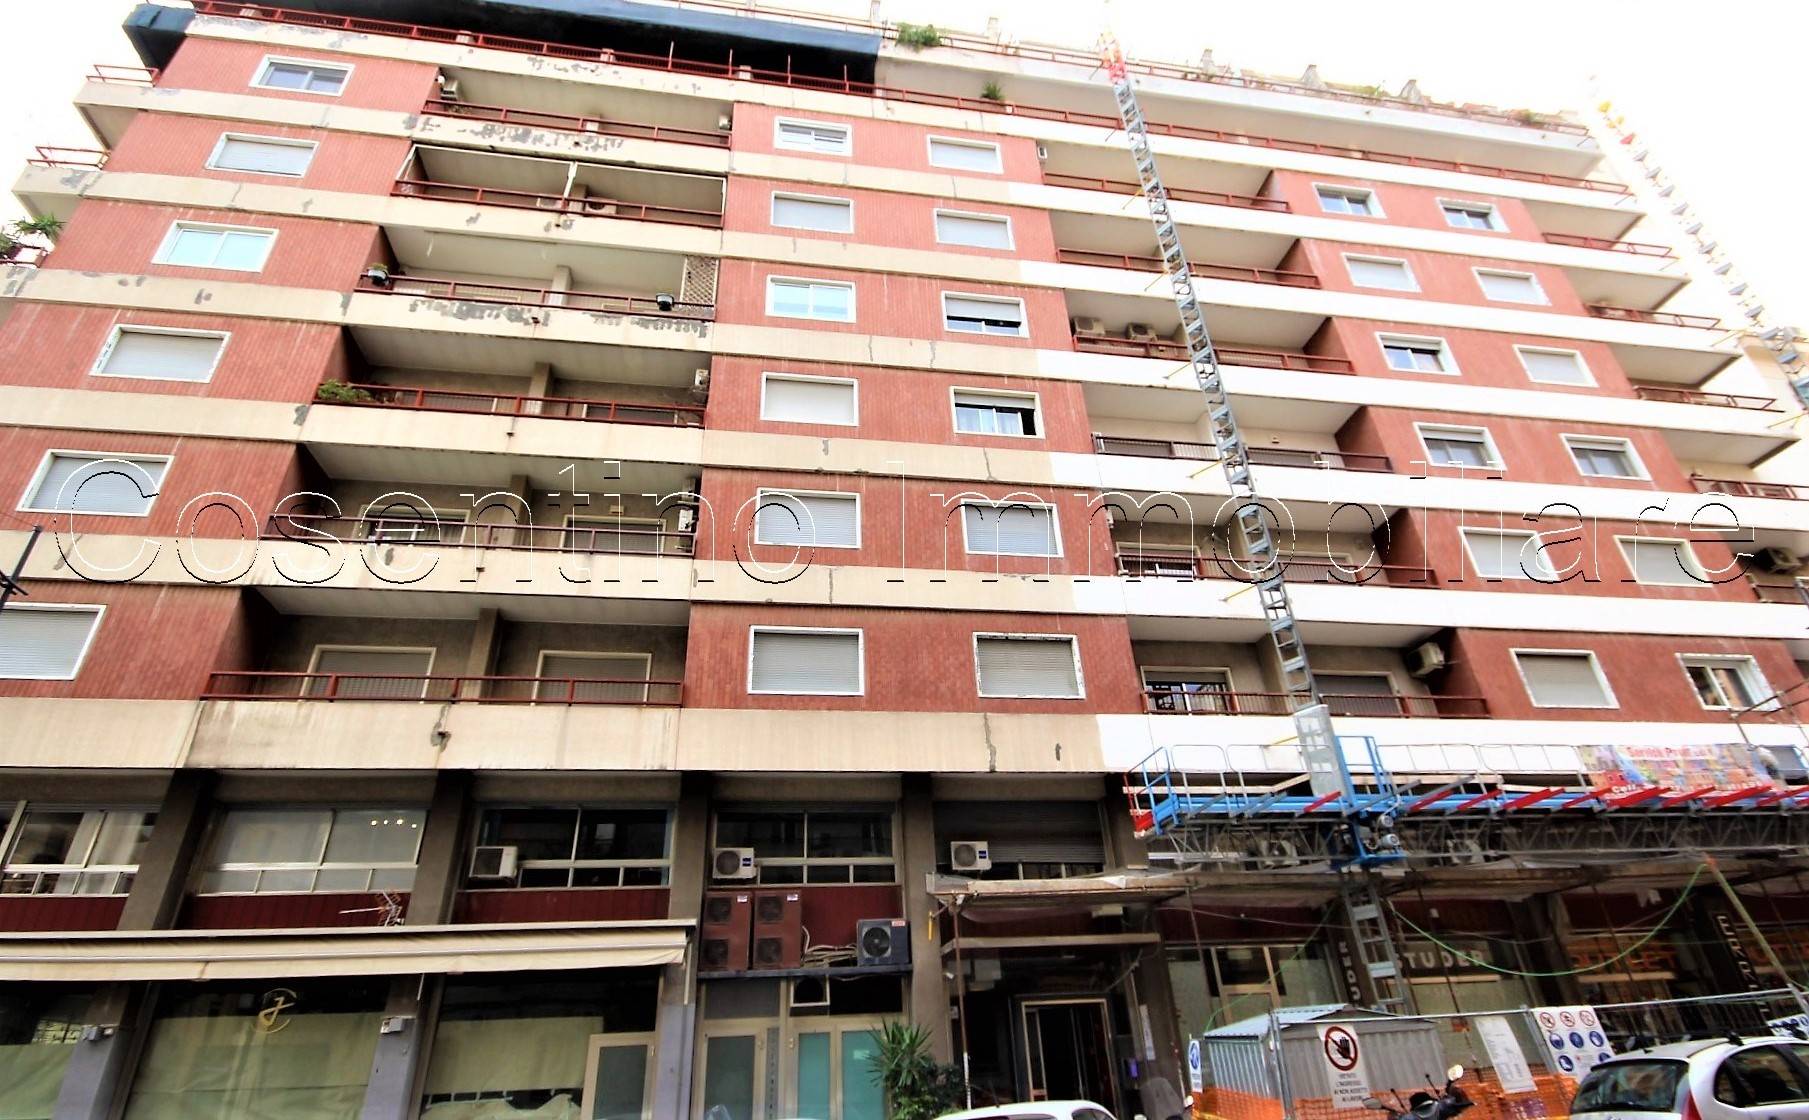 Appartamento abitabile in zona Notarbartolo a Palermo